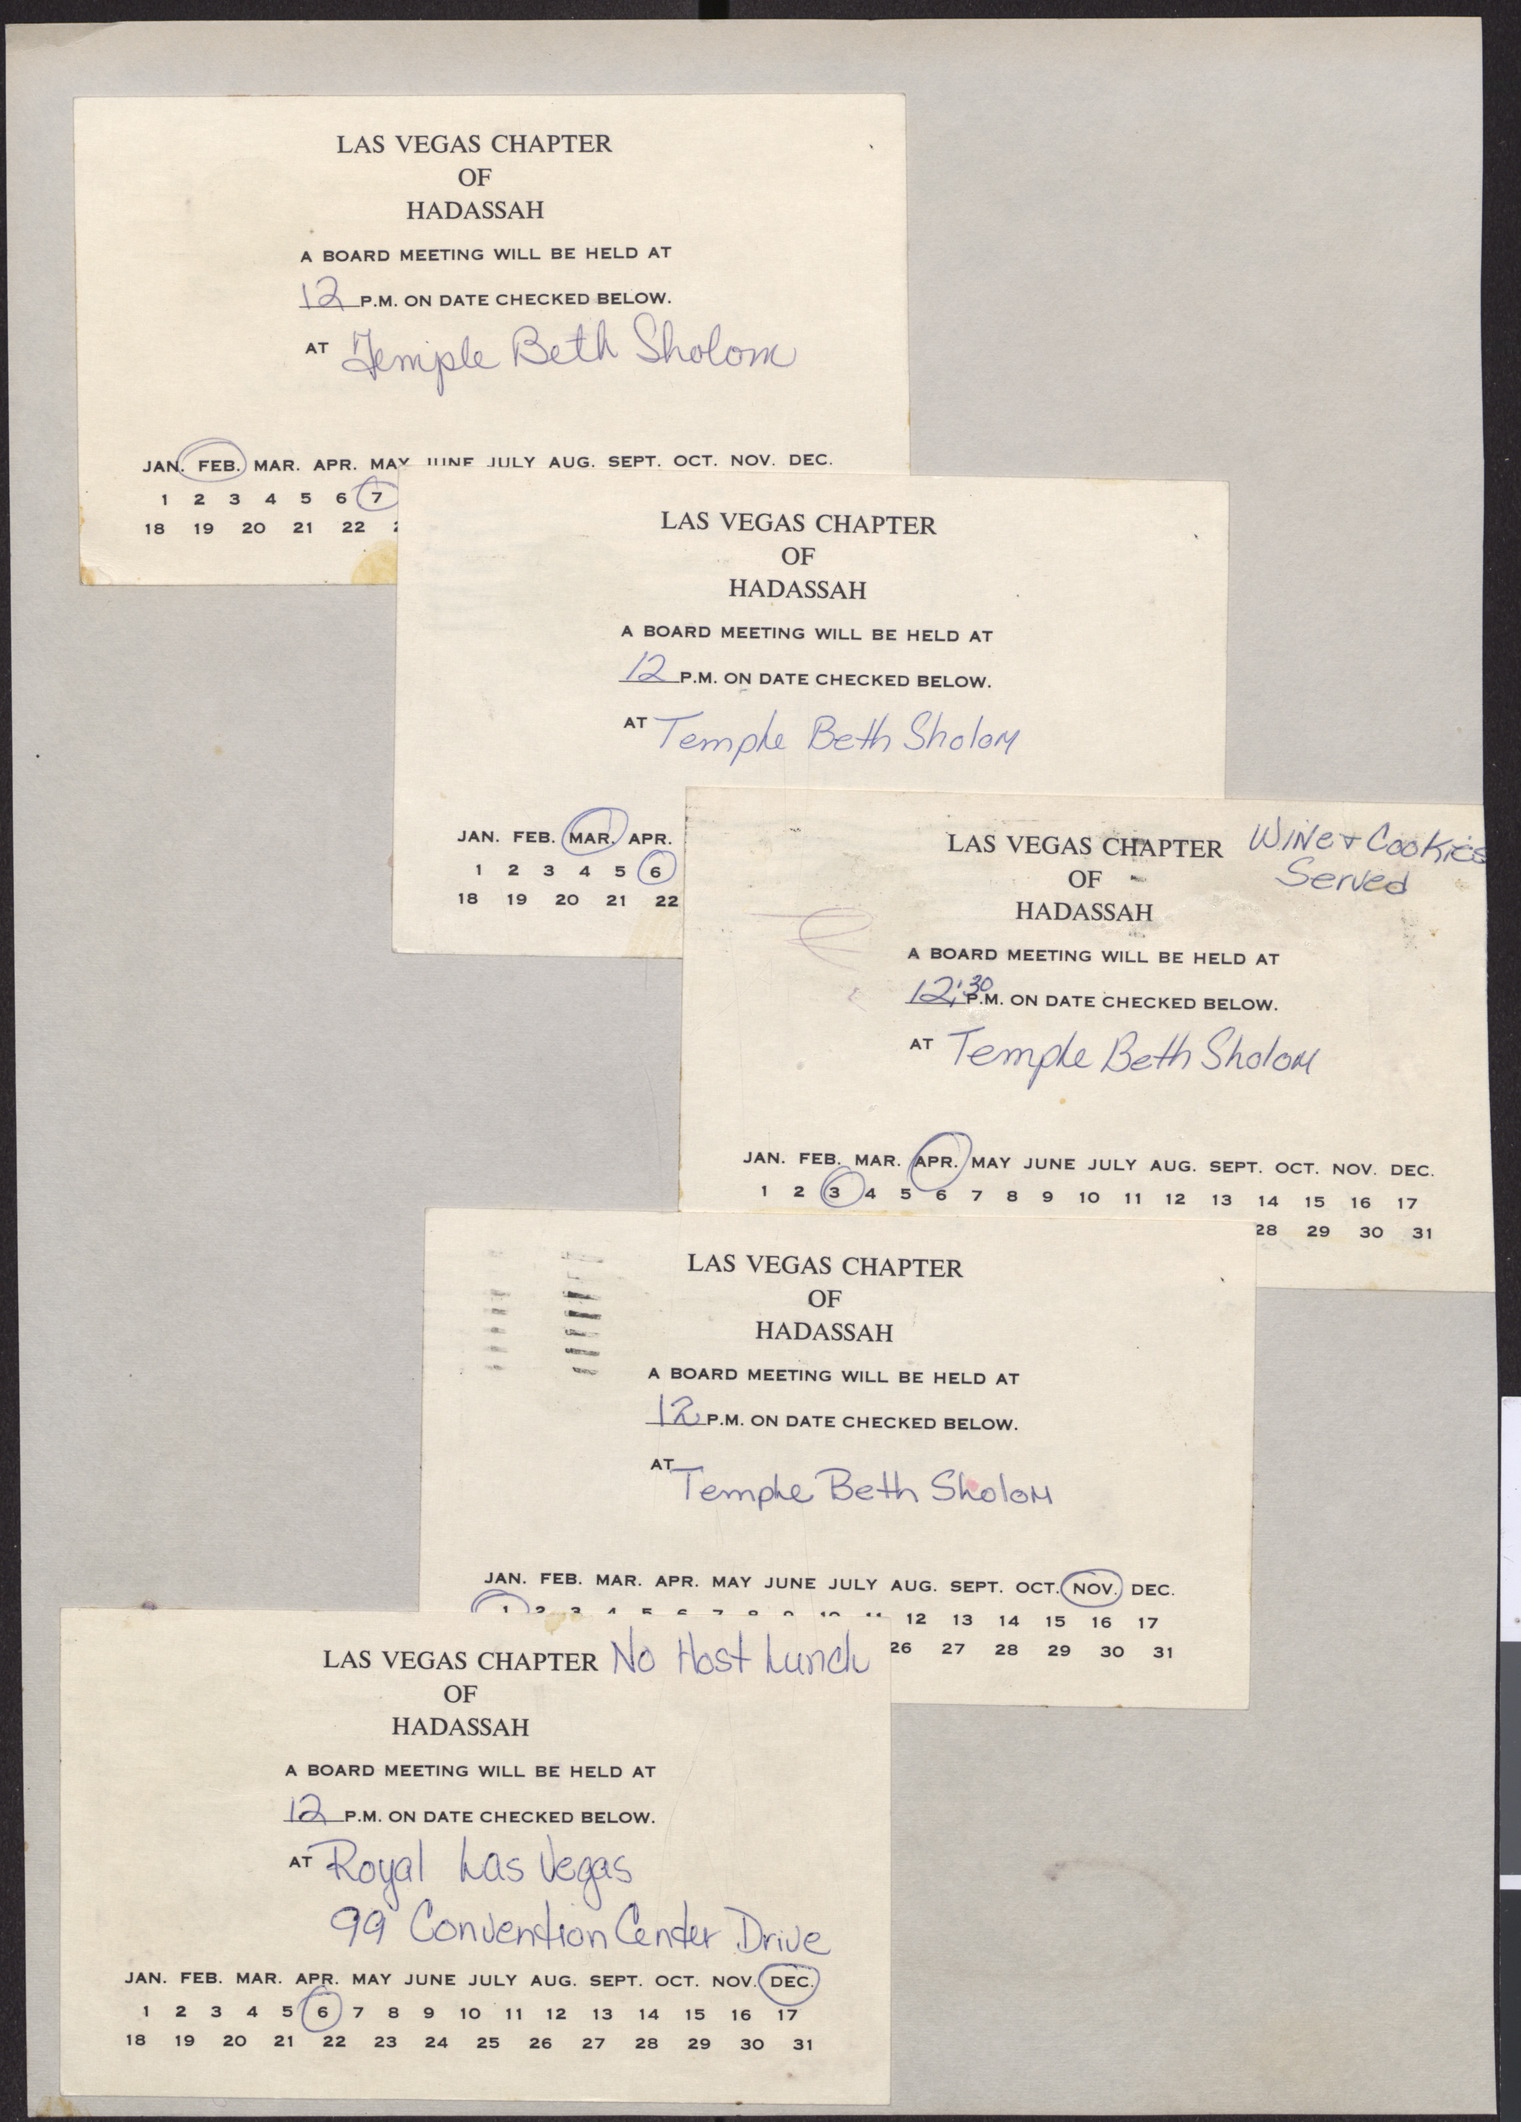 Invitation cards to Hadassah board meetings, February-December 1971